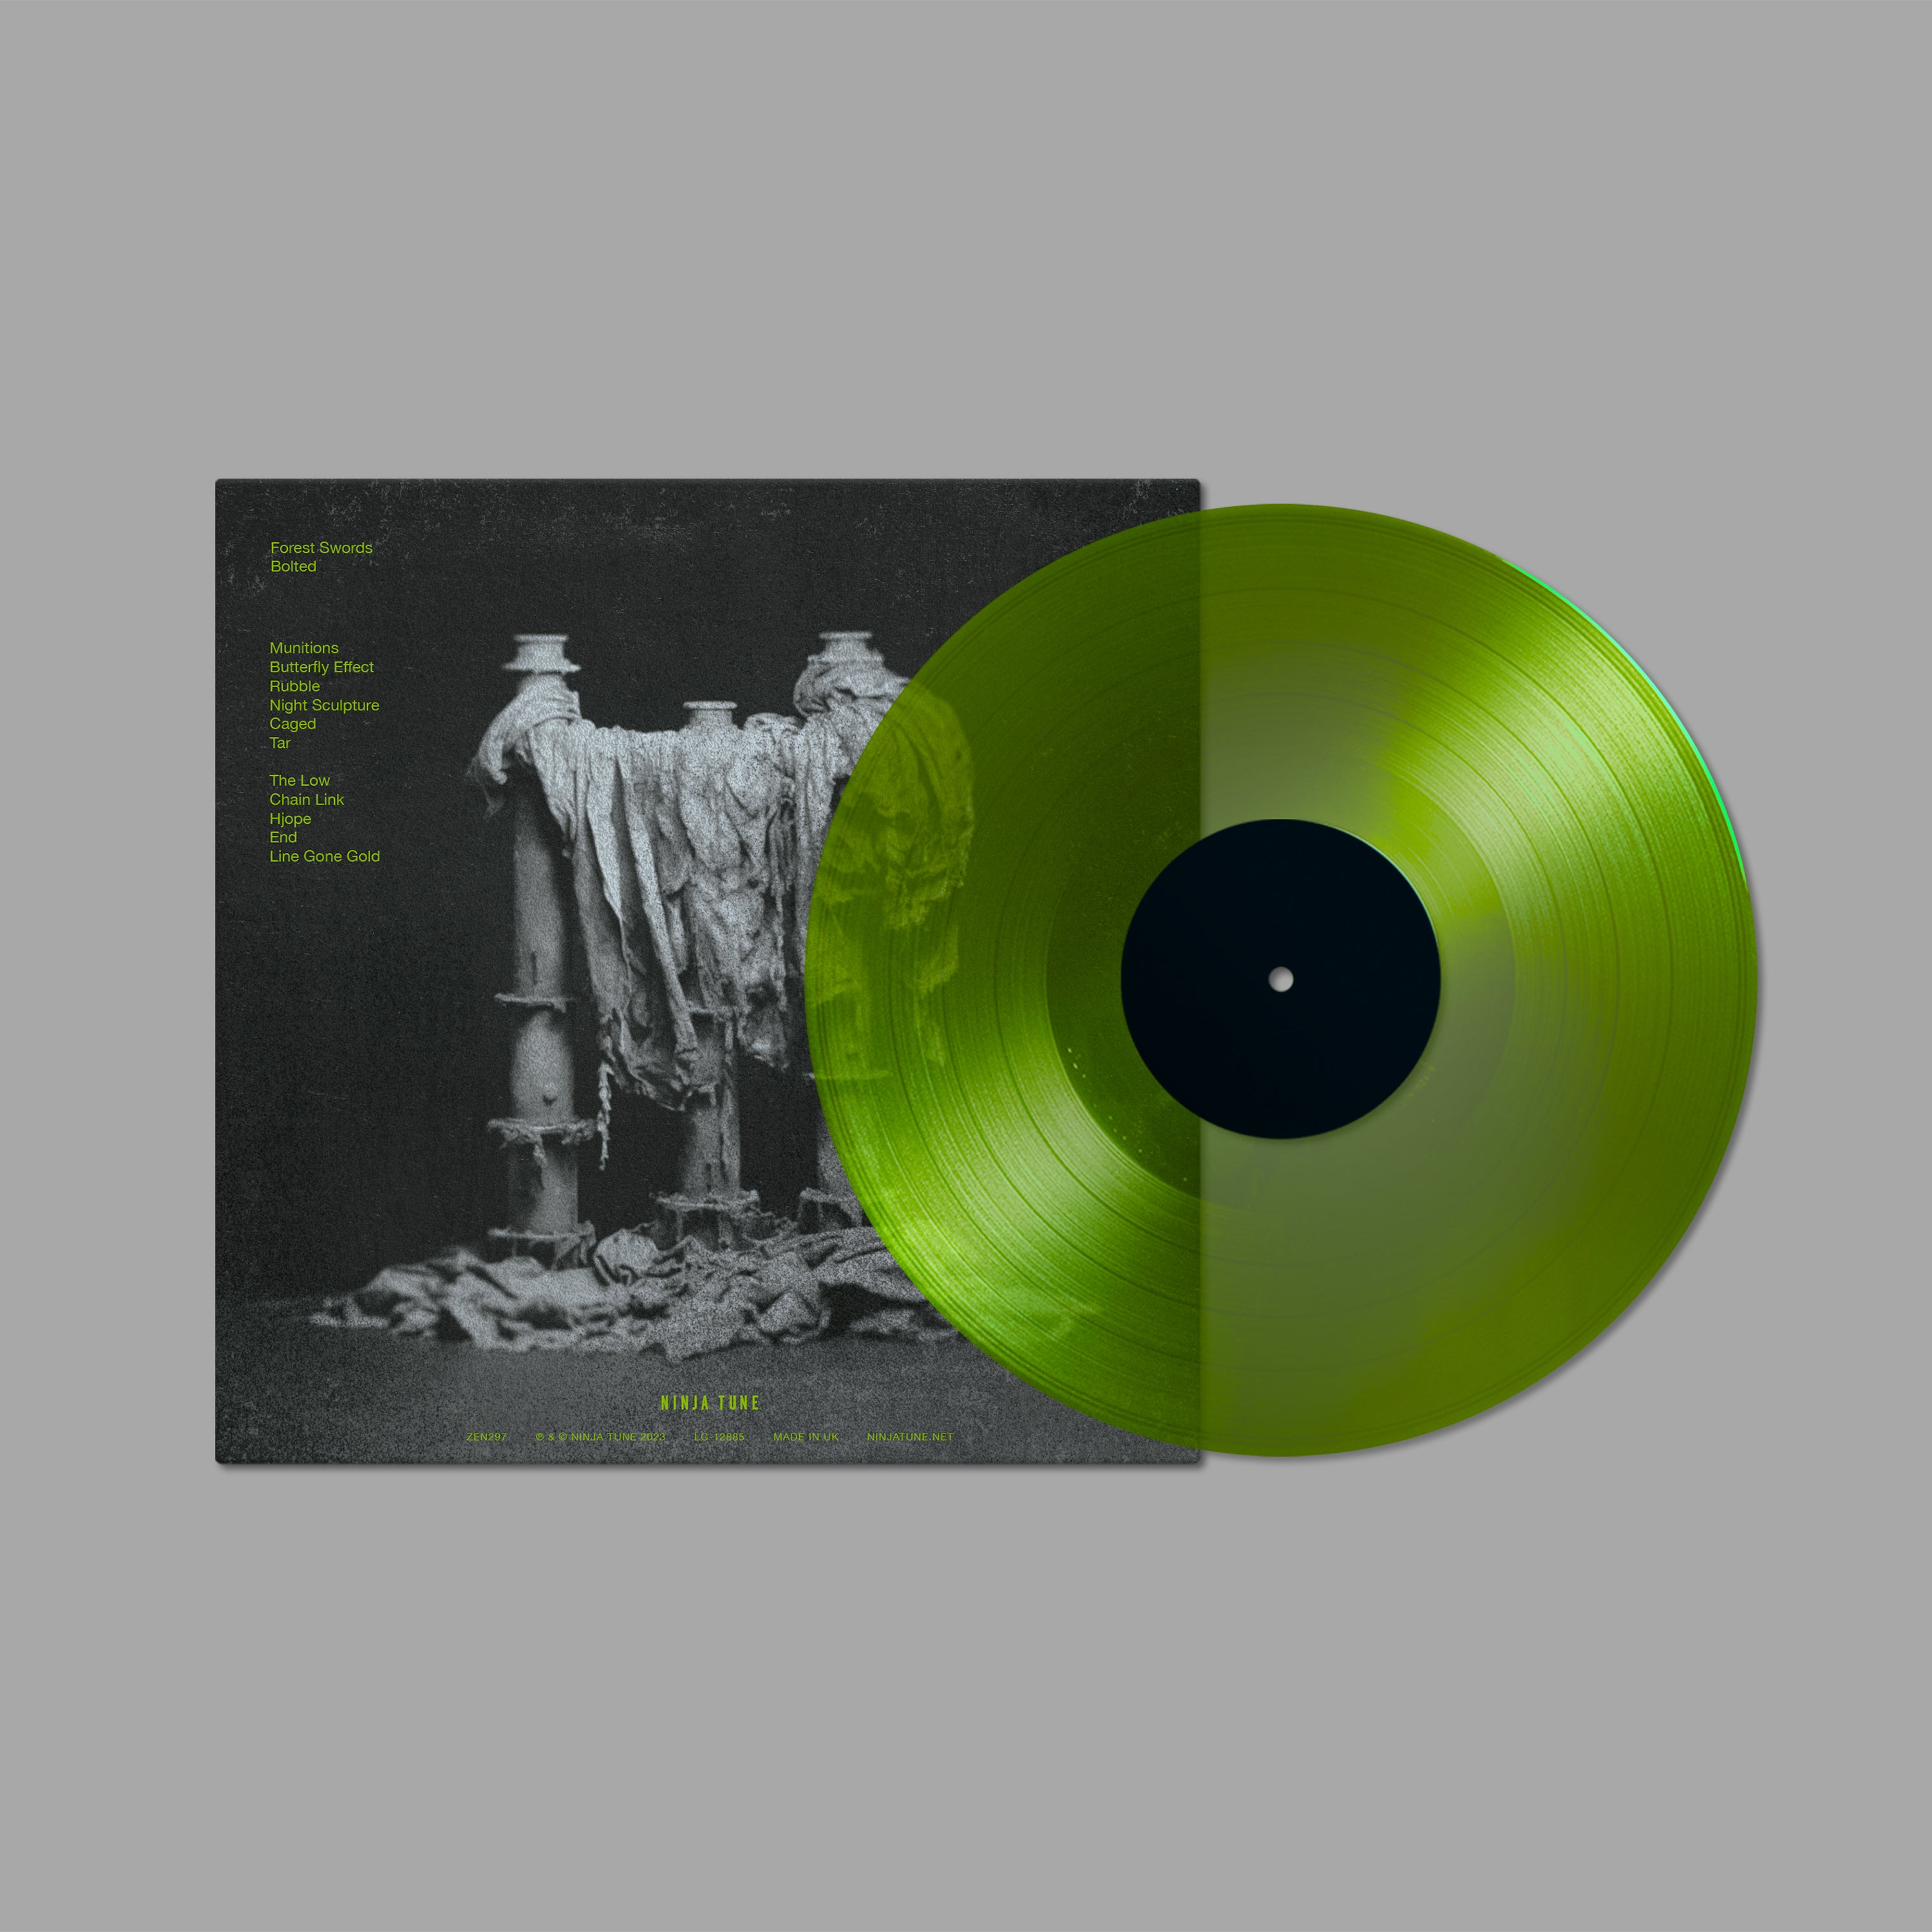 Forest Swords - Bolted: Translucent Algae Green Vinyl LP